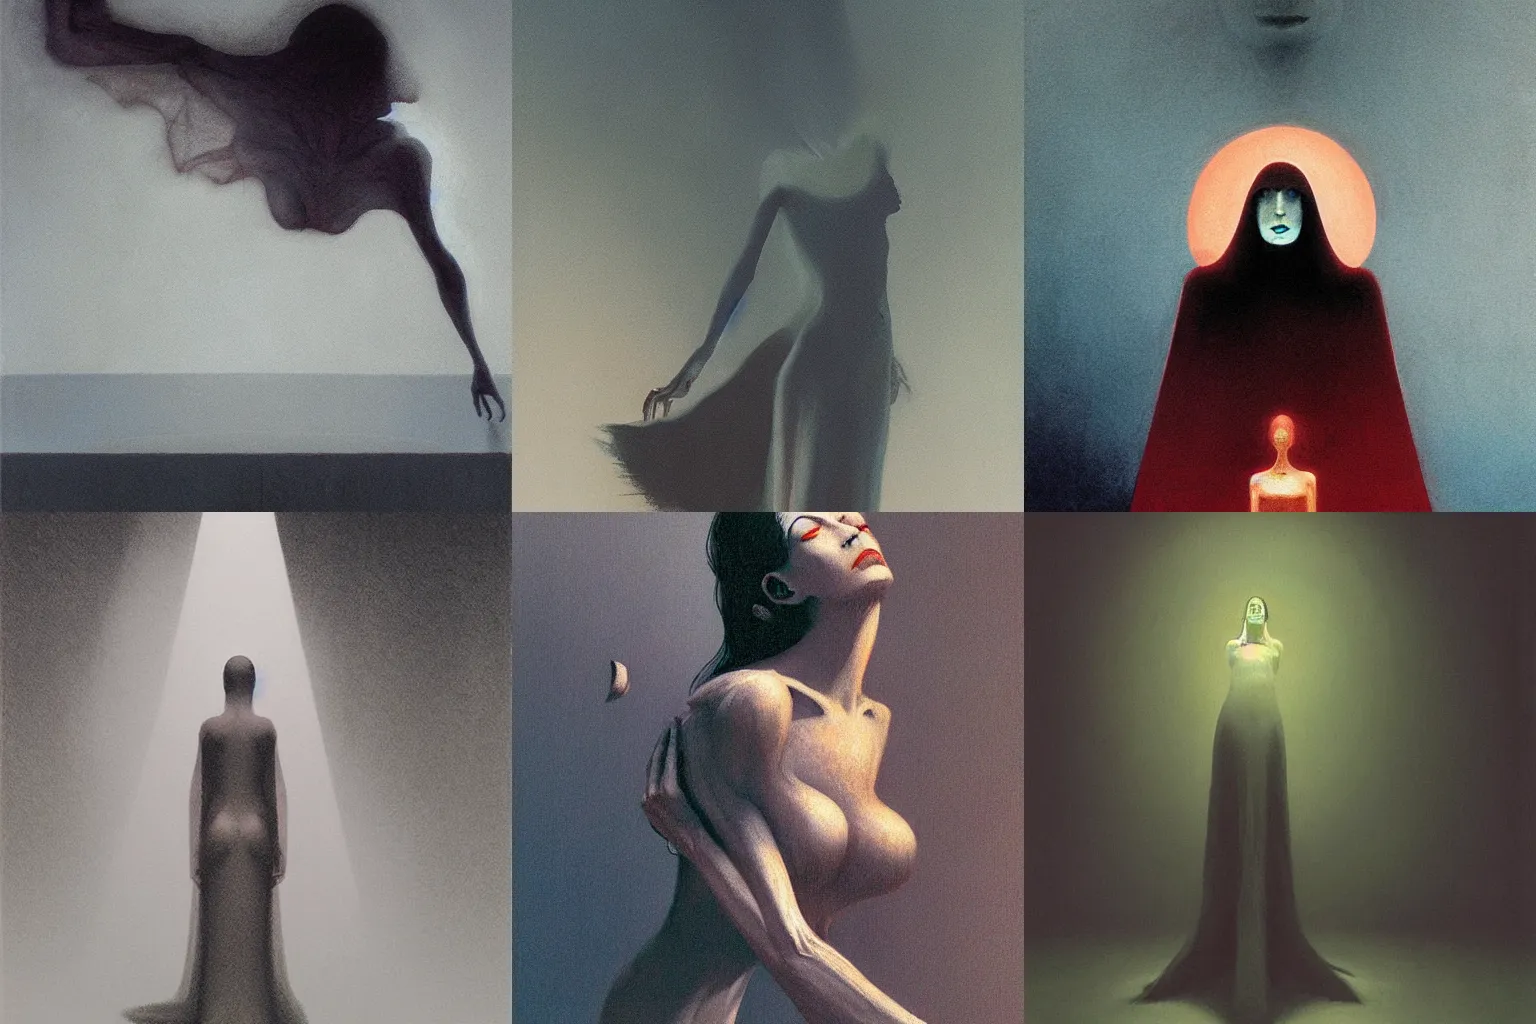 Prompt: dark shrouded woman performing ethereal ritual, expanding energy, epic surrealism by Edward Hopper and James Gilleard, Zdzislaw Beksinski, Katsuhuro Otomo highly detailed